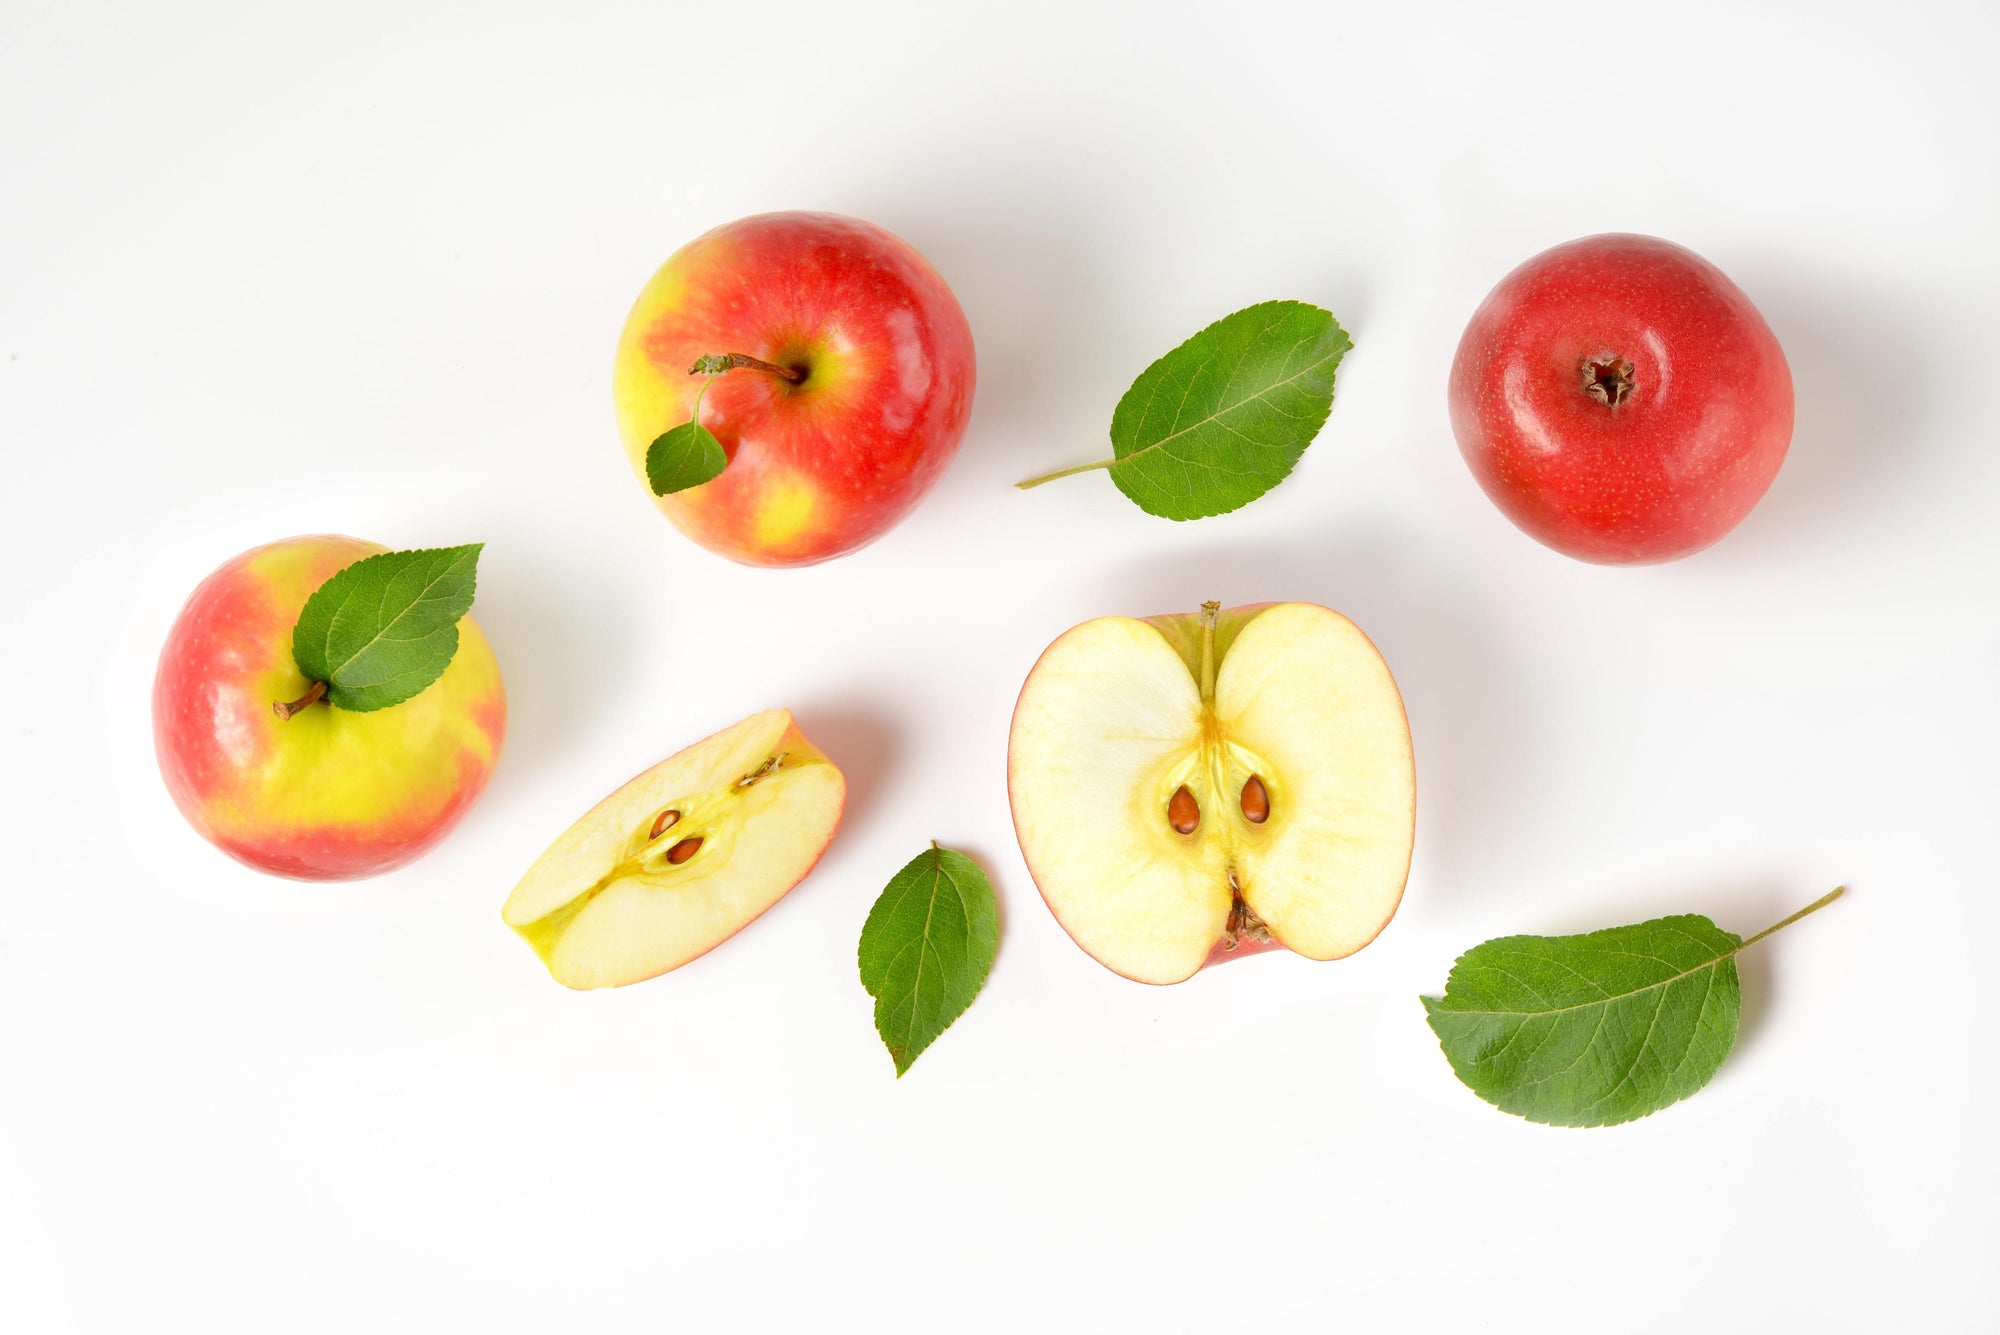 9 Juicy Apple Facts: Sweet, Crisp, and Ripe